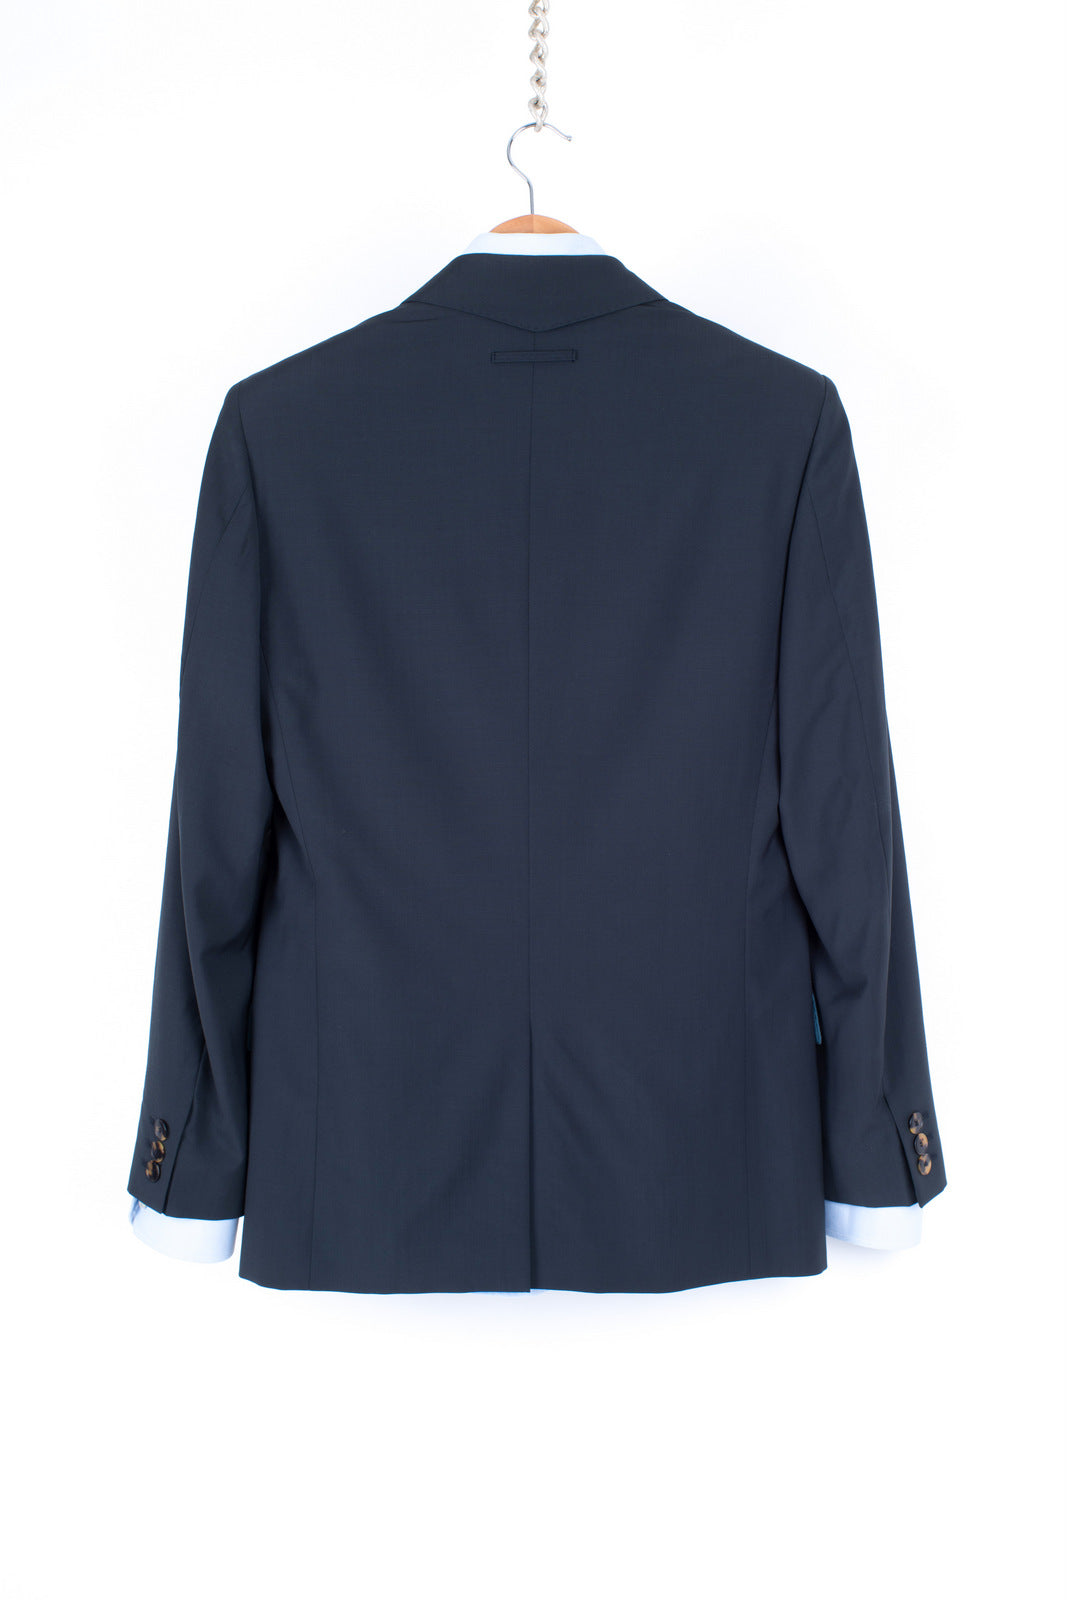 Jean Paul Gaultier Lightweight Blue Wool 2 Pieces Suit, US 38, EU 48